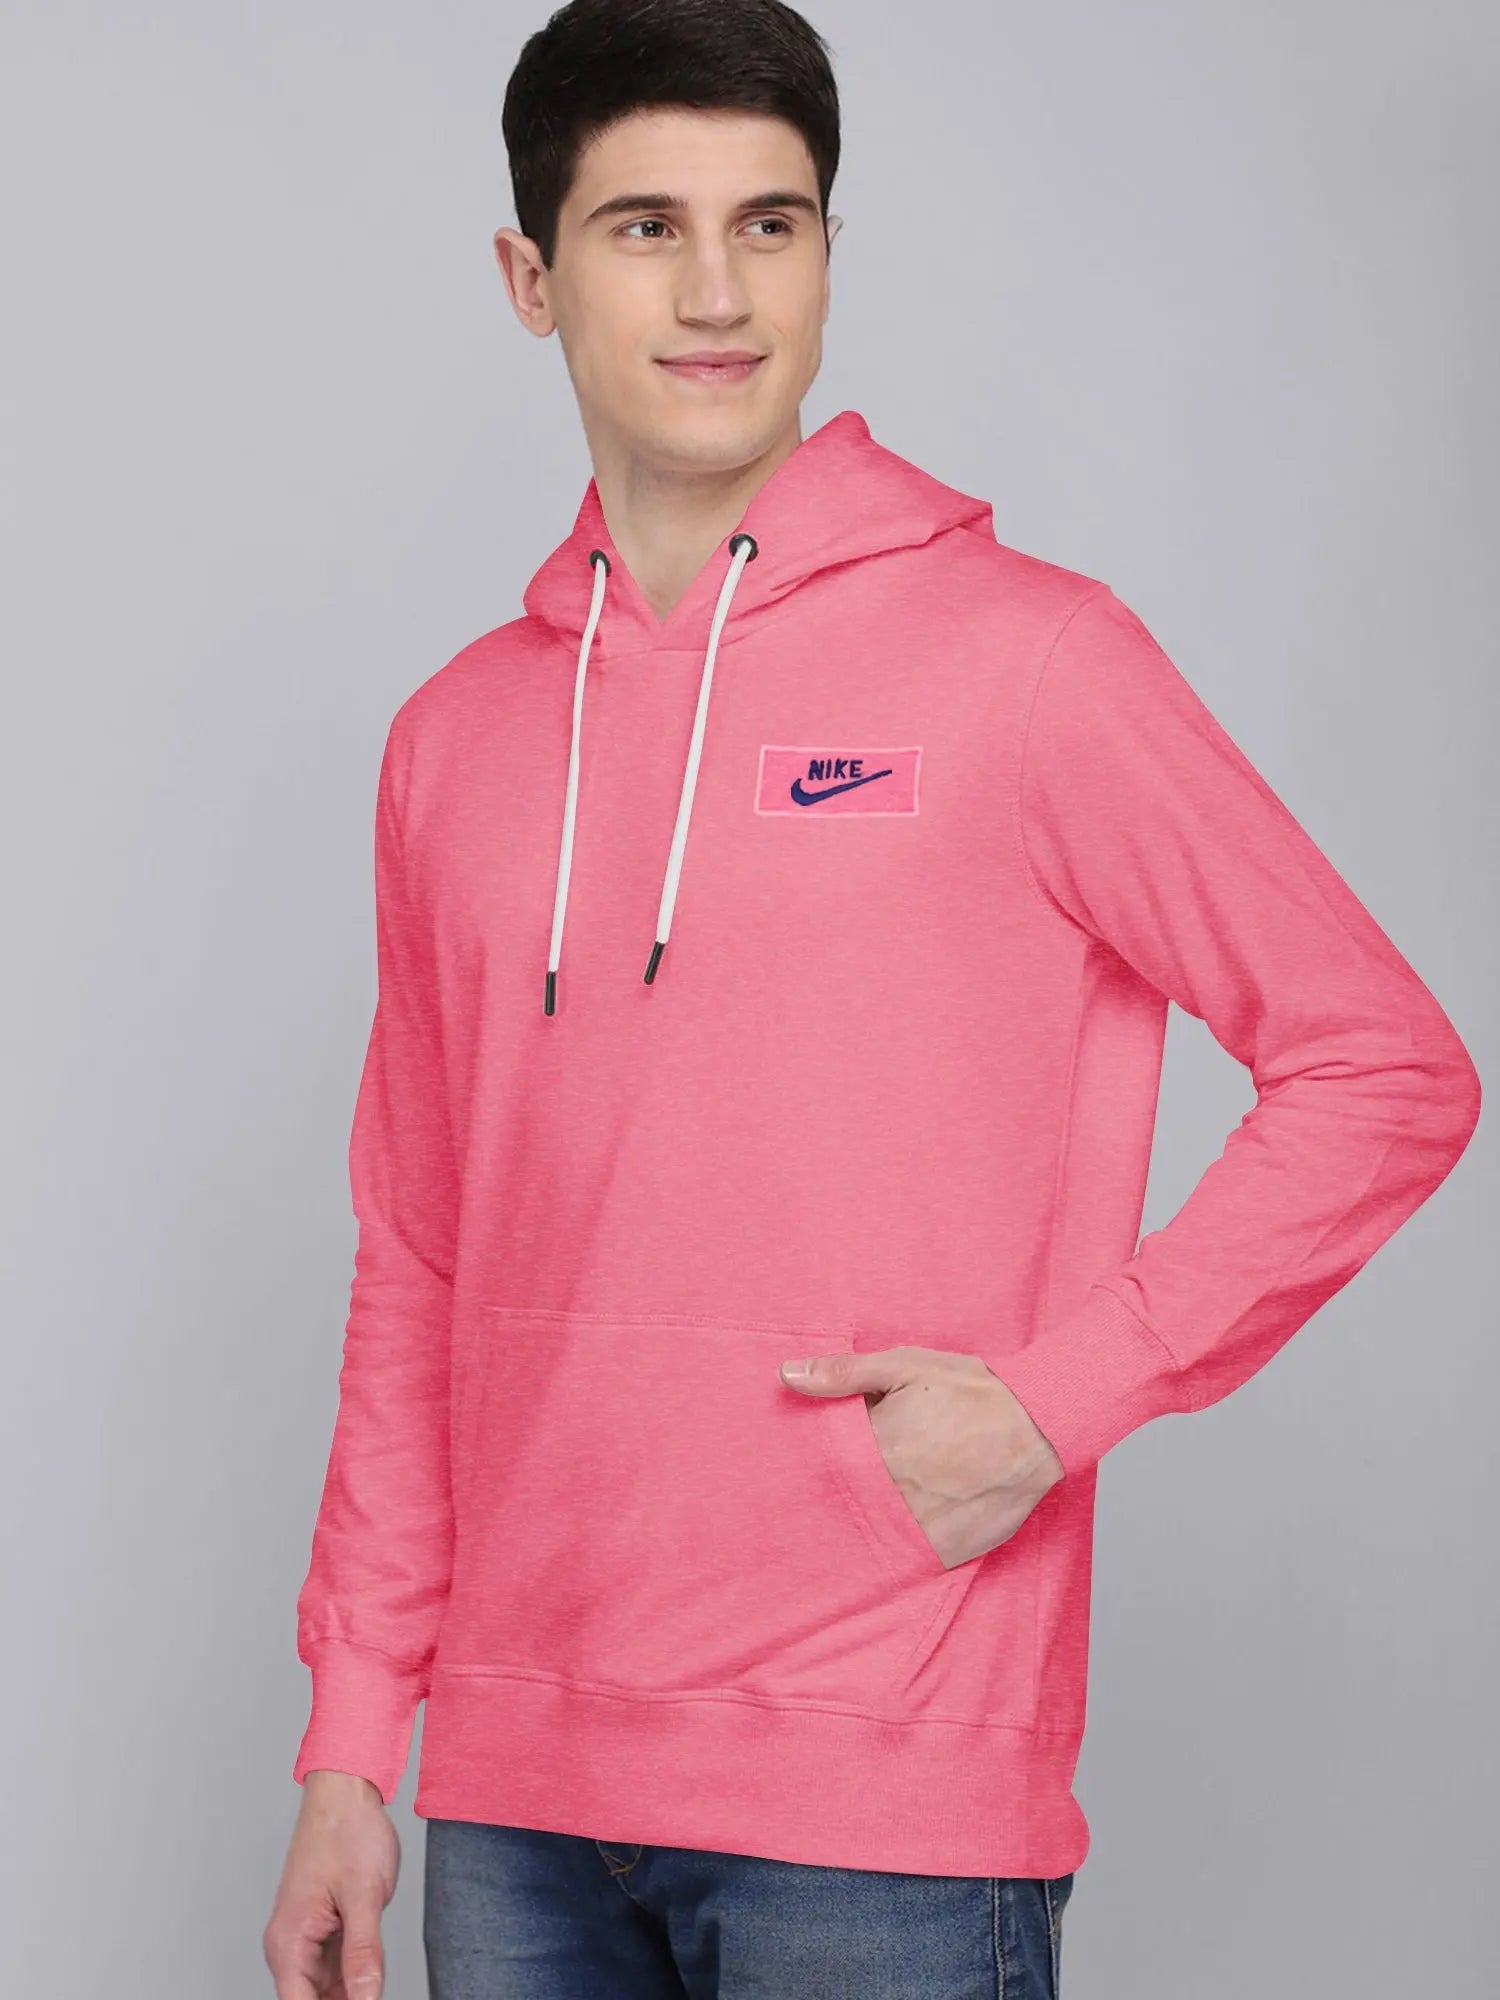 Nk Fleece Pullover Hoodie For Men-Pink Melange-AJ371 NK